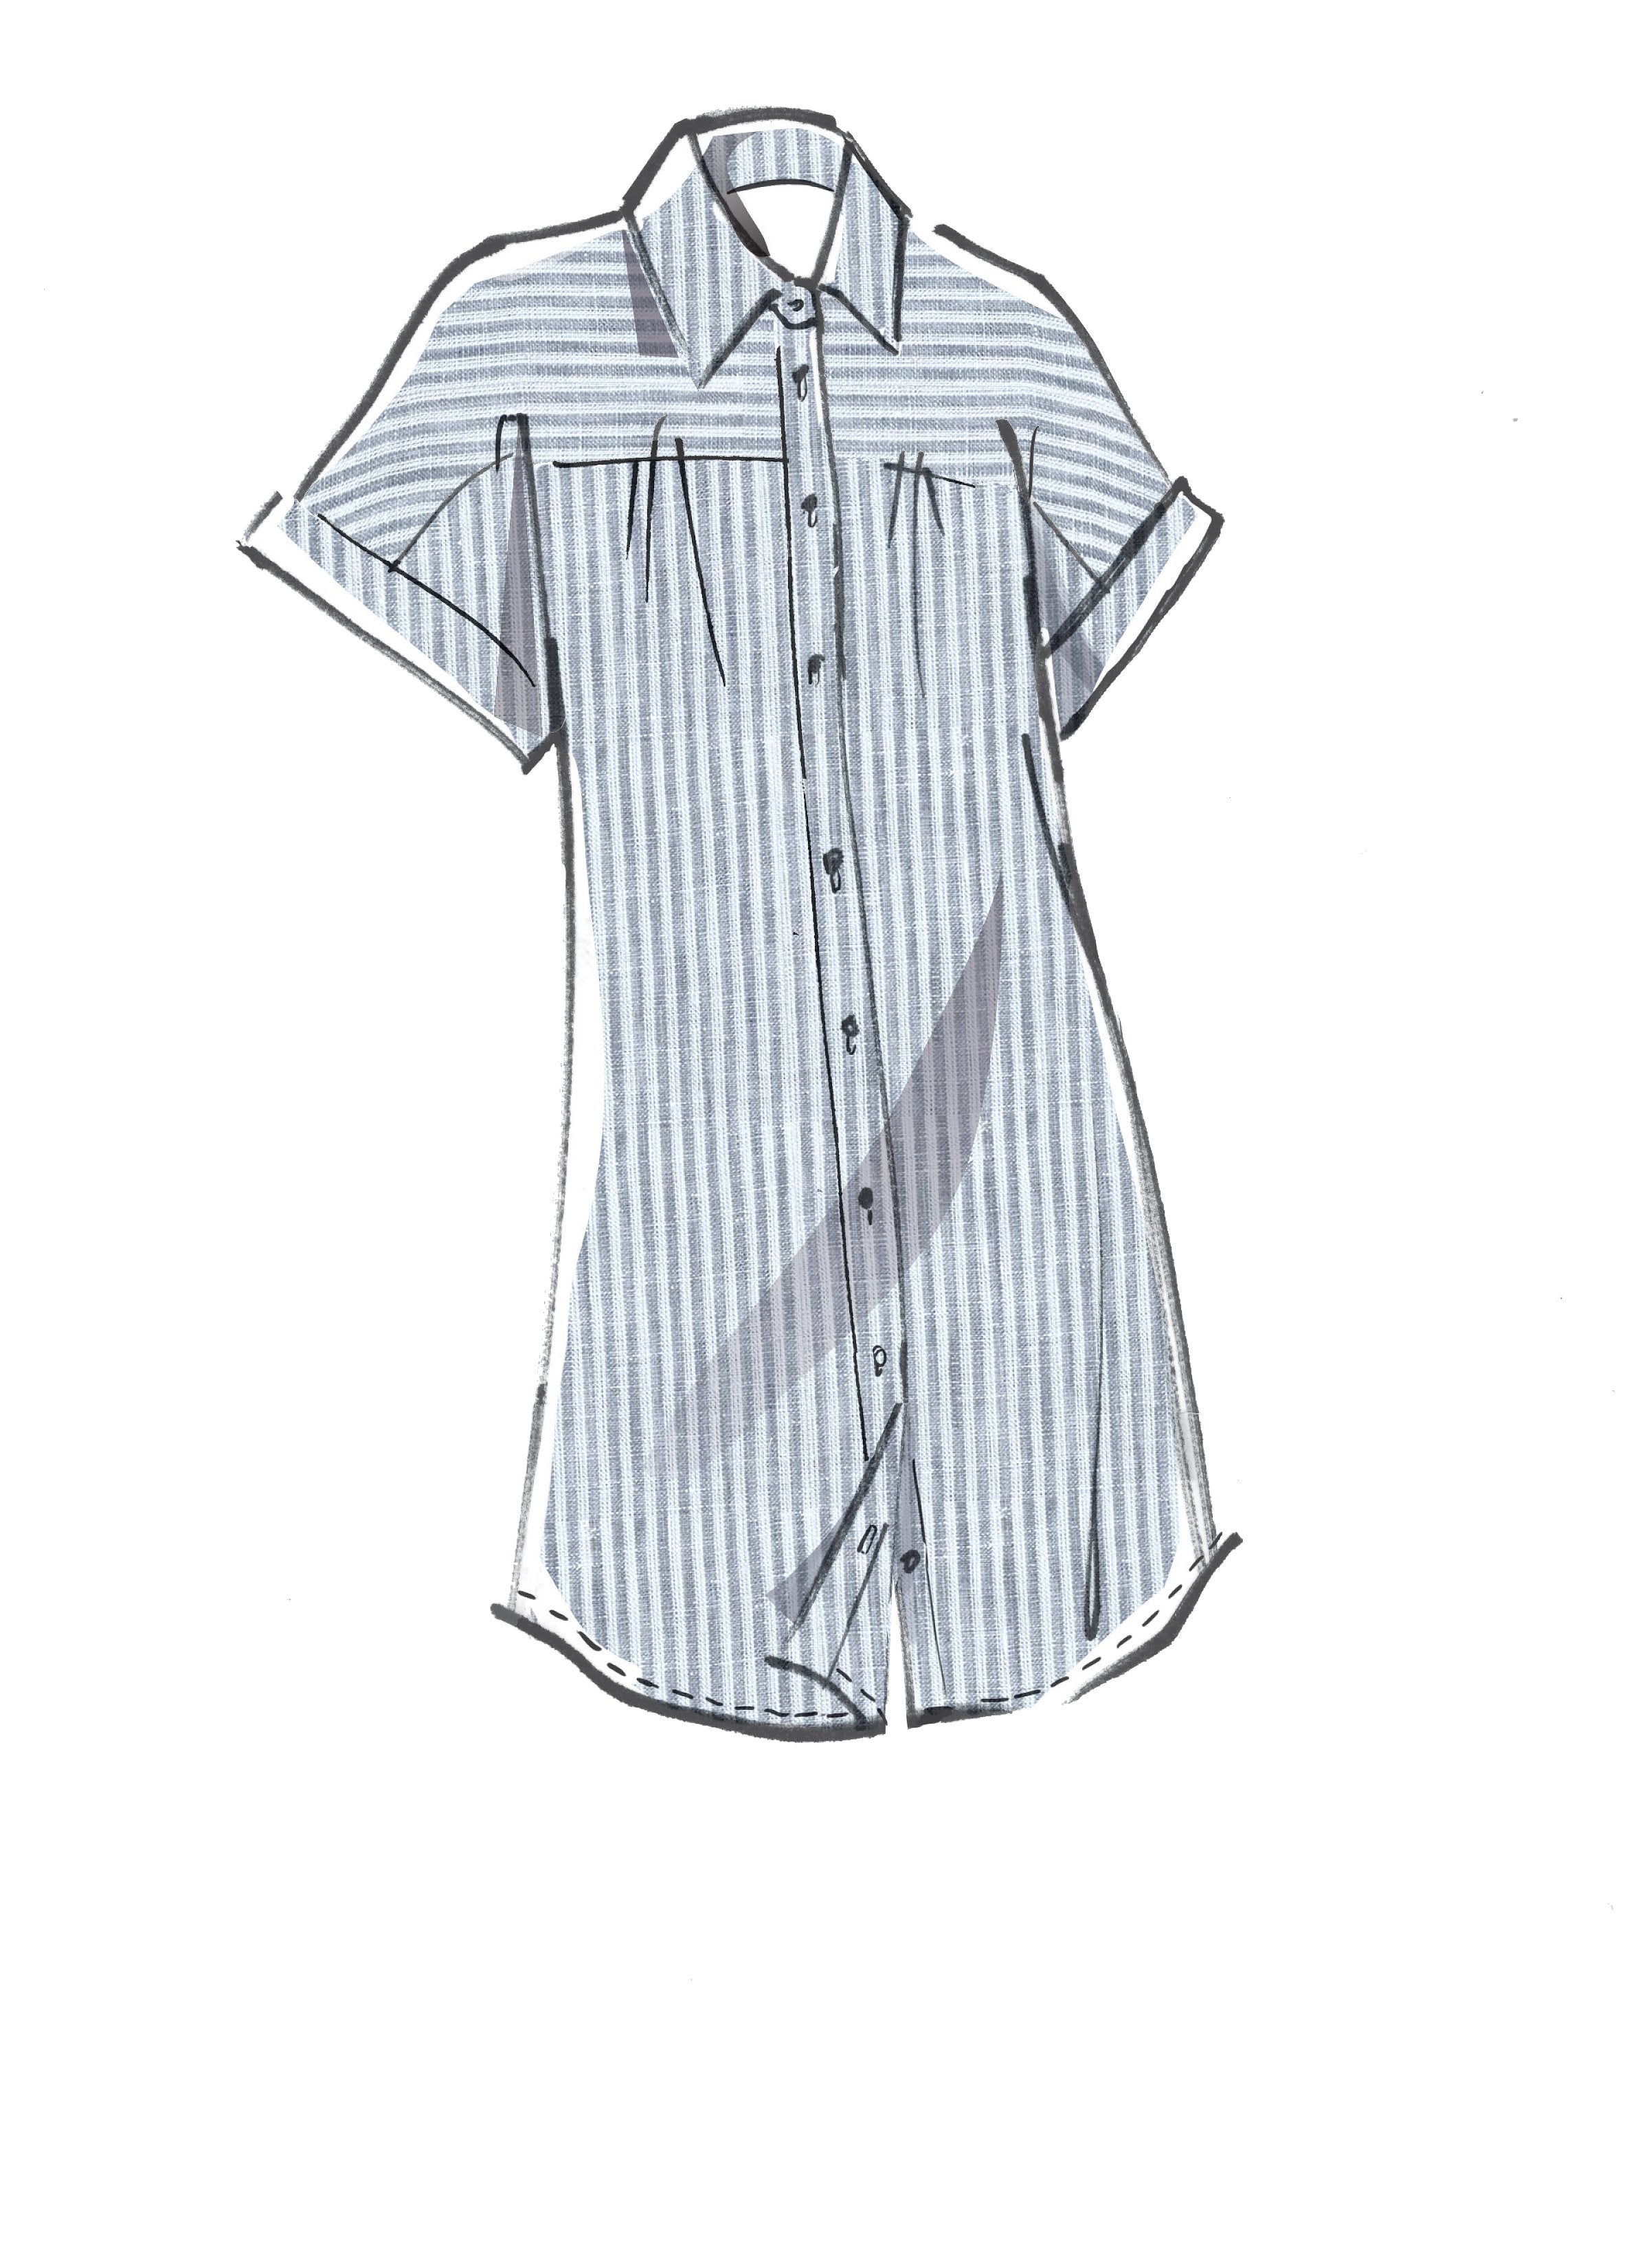 McCalls Sewing Pattern 8177 Misses' Dresses and Belt